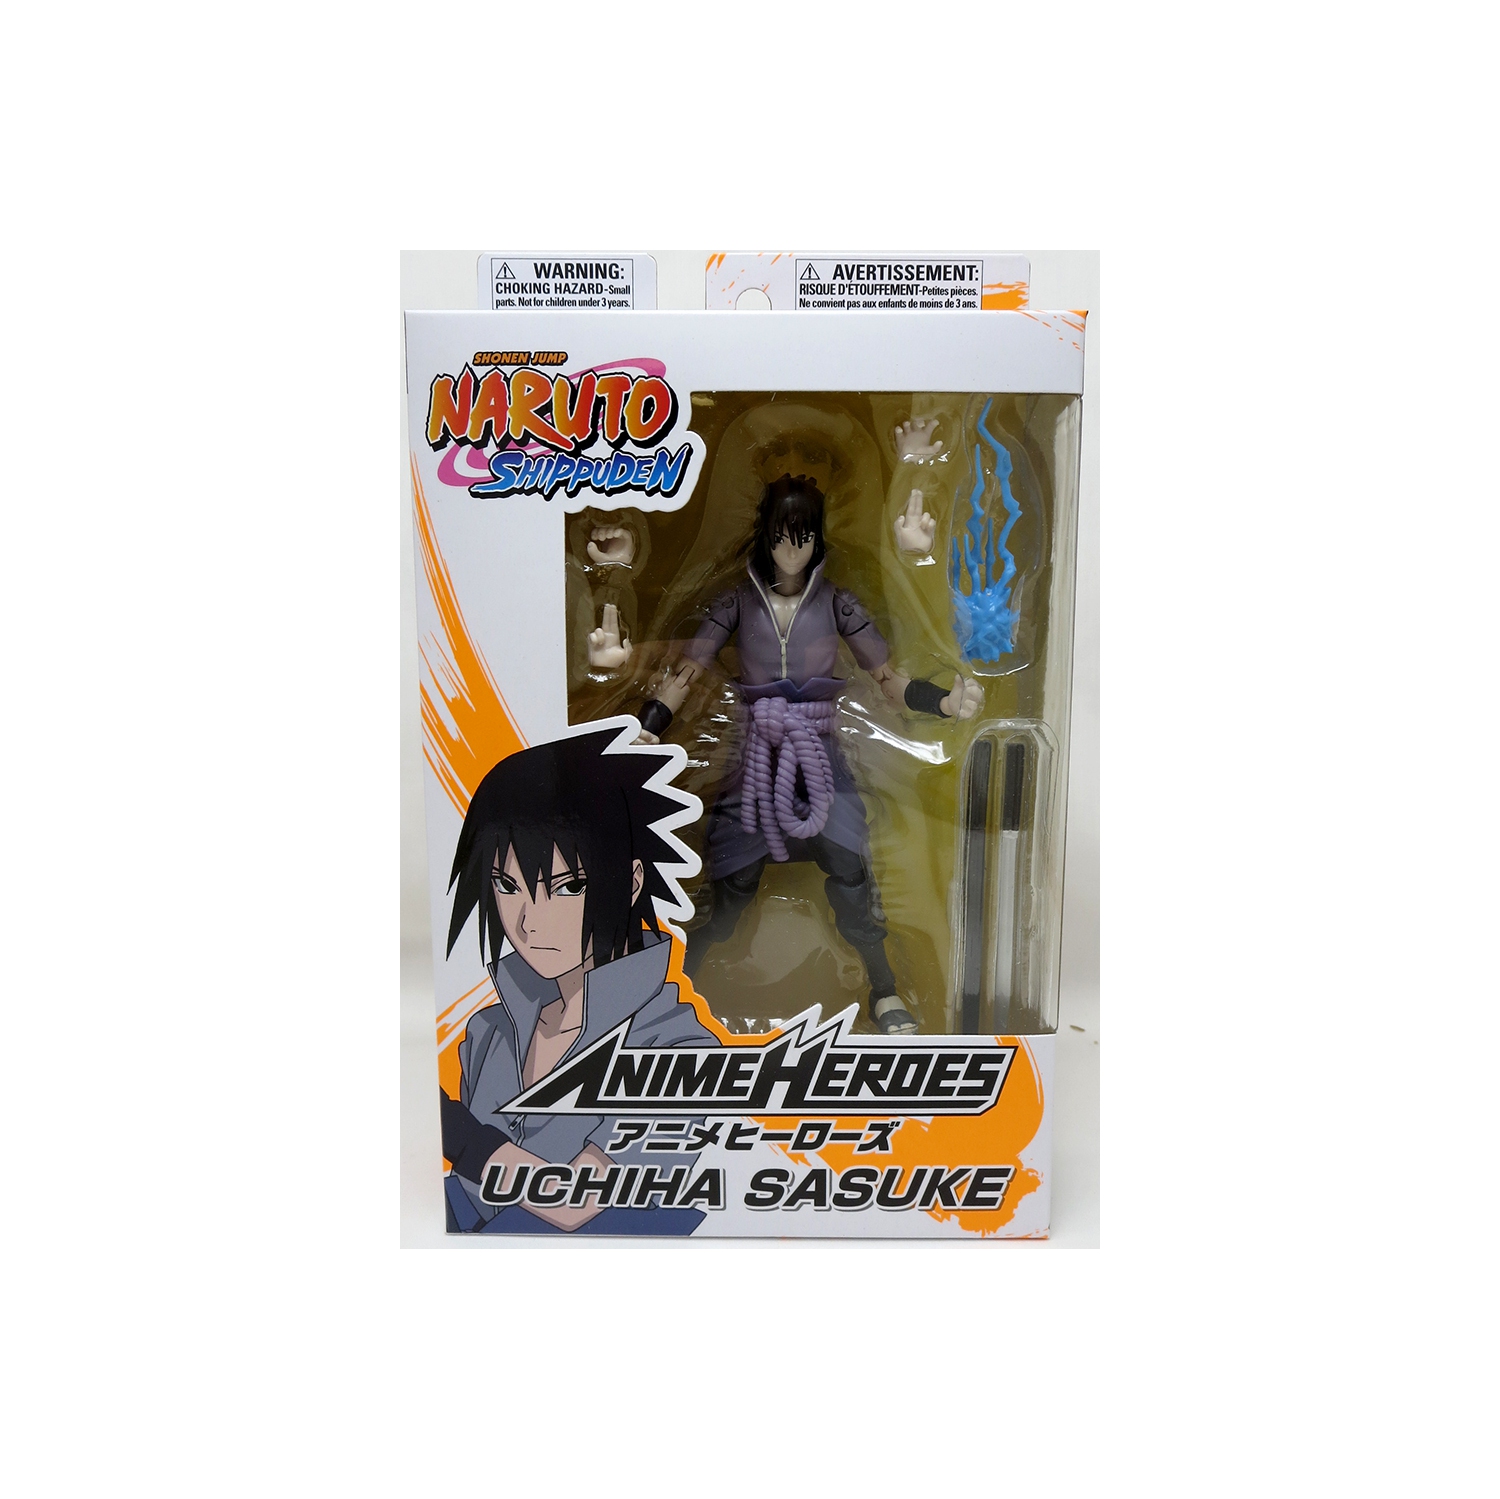 Naruto Shippuden 6 Inch Action Figure Anime Heroes - Sasuke